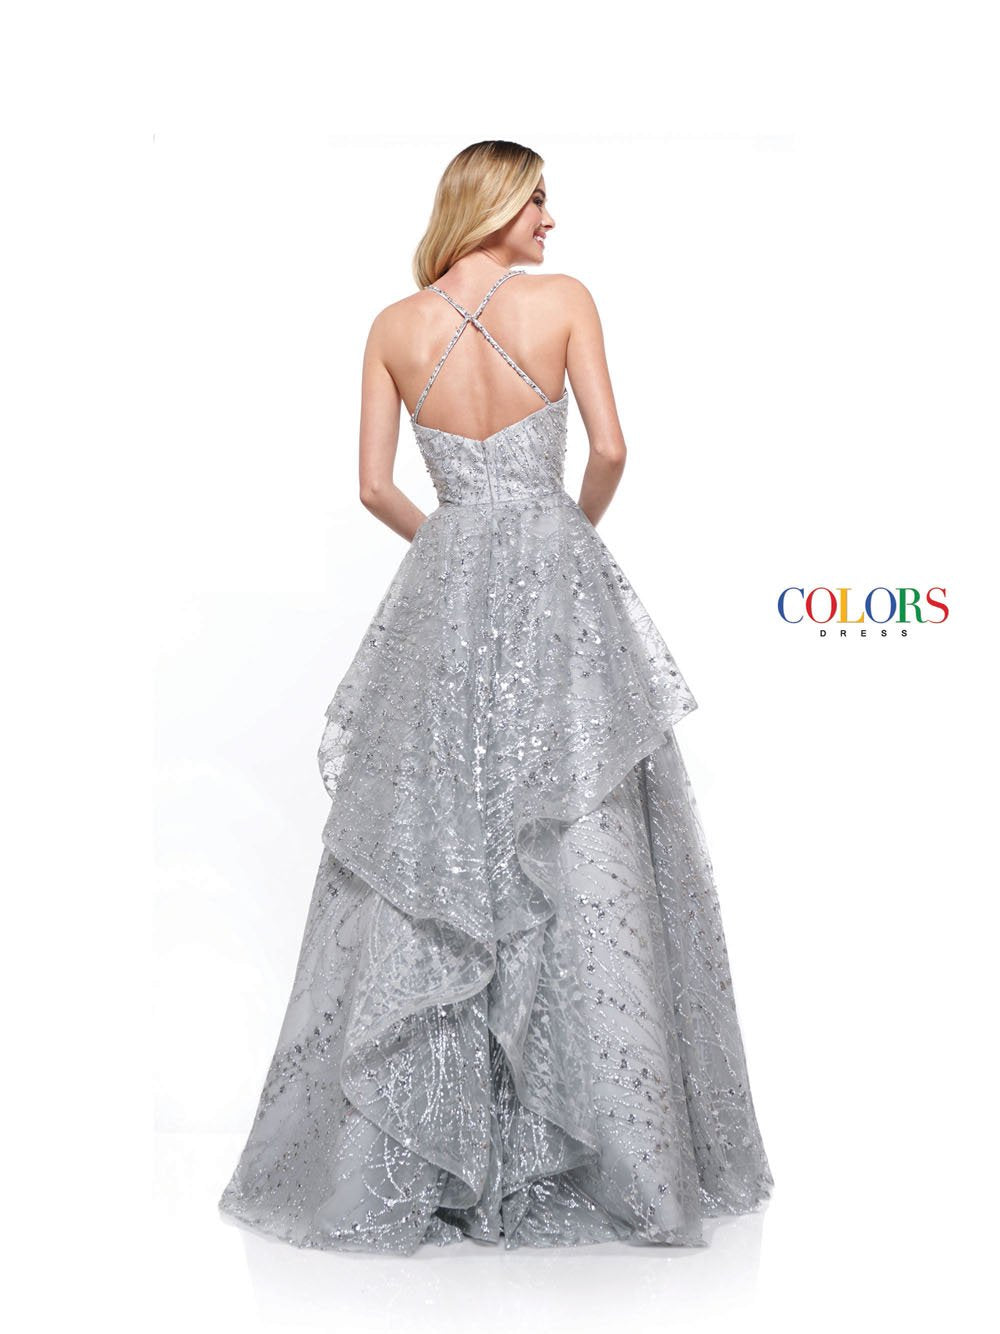 silver color dress